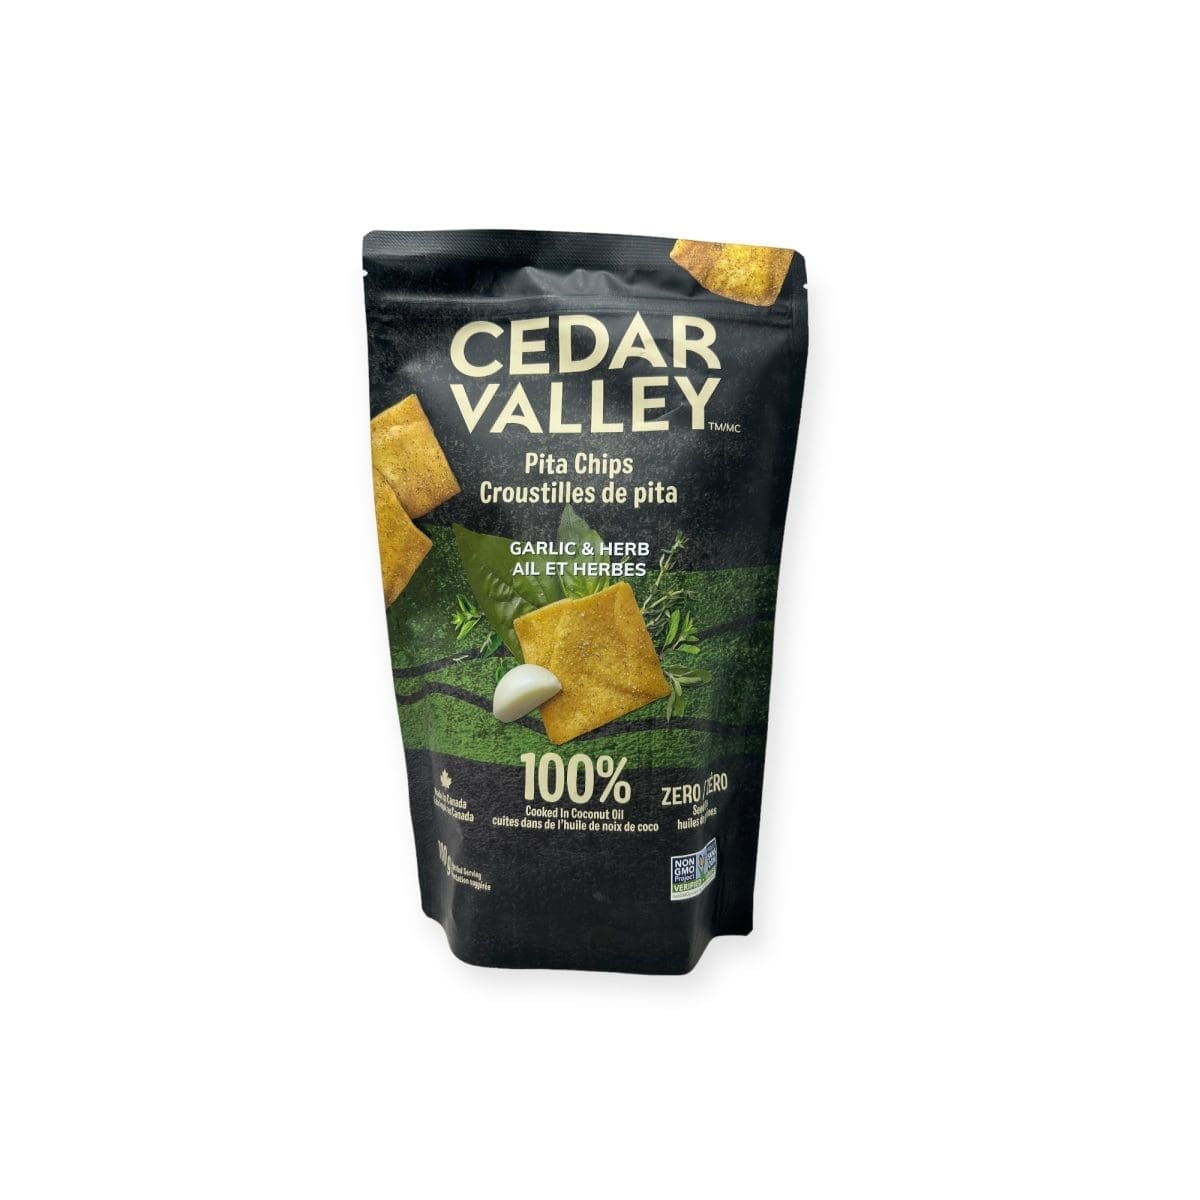 Cedar Valley Pita Chips (180g)